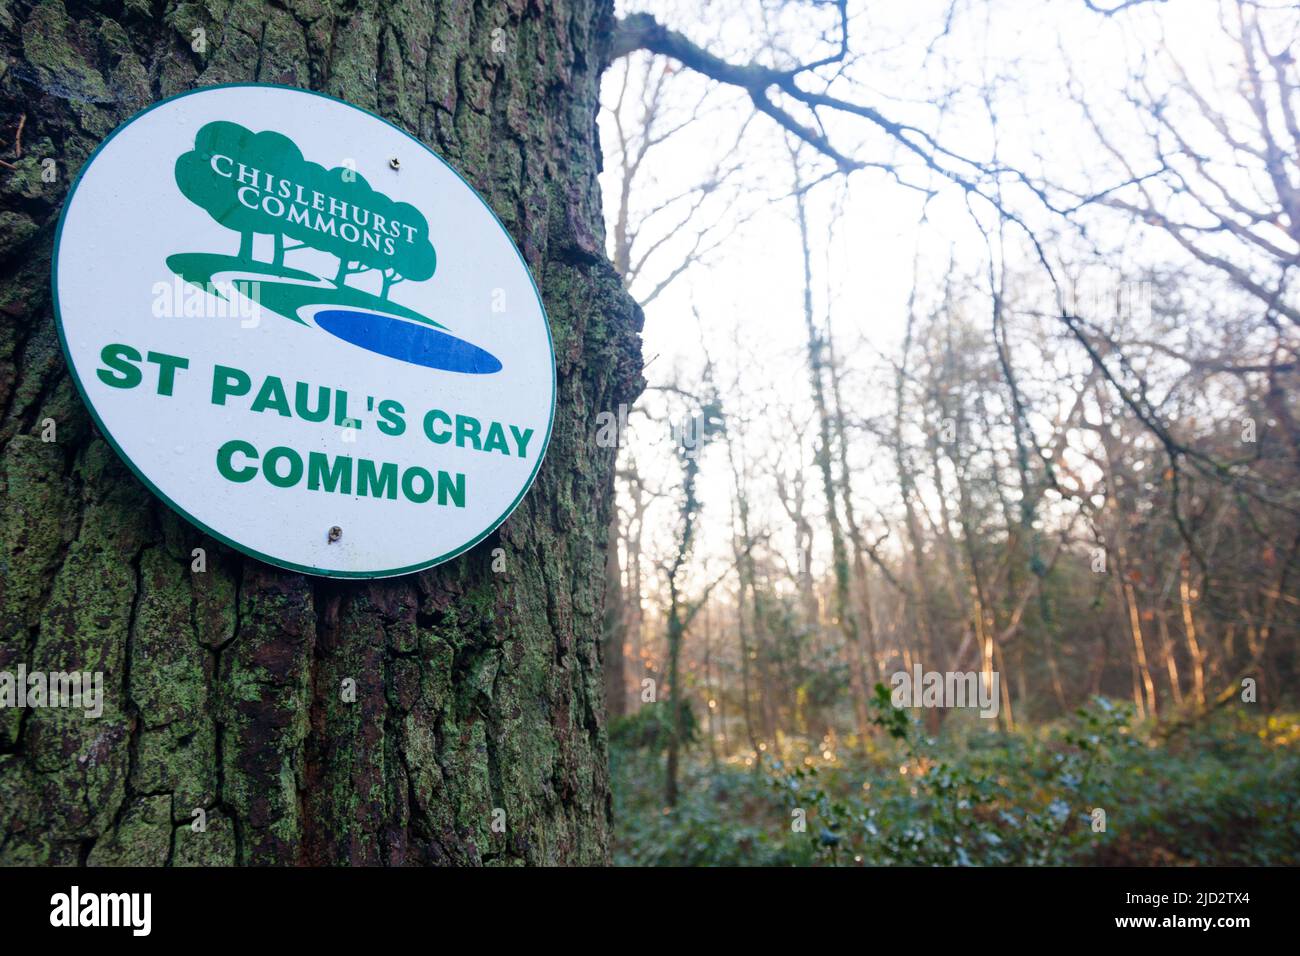 St Pauls Cray Common, Chislehurst, Kent, UK. In London Borough of Bromley, Southeast London. Stock Photo